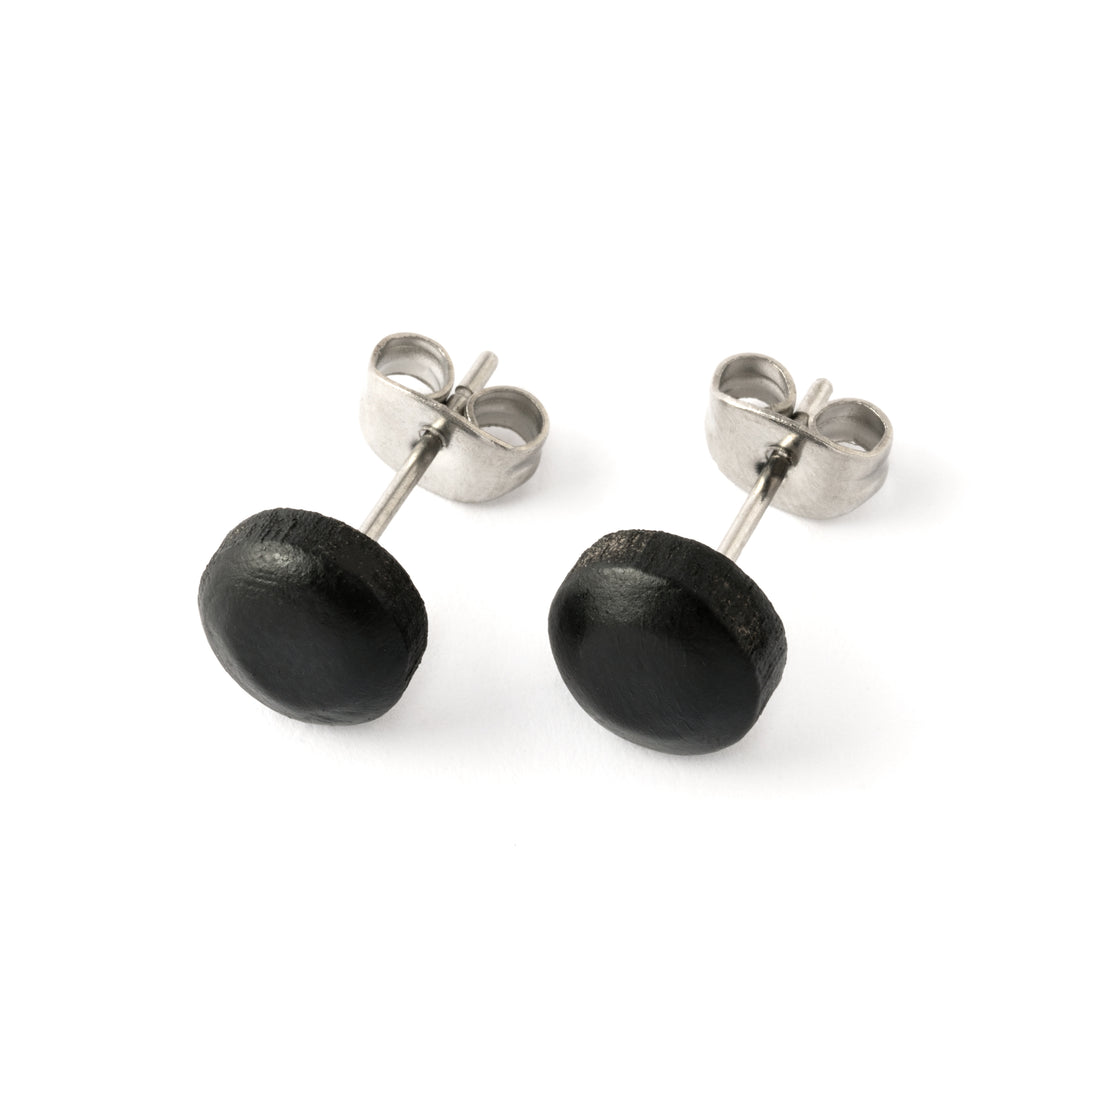 pair of black wood disc stud earrings right side view